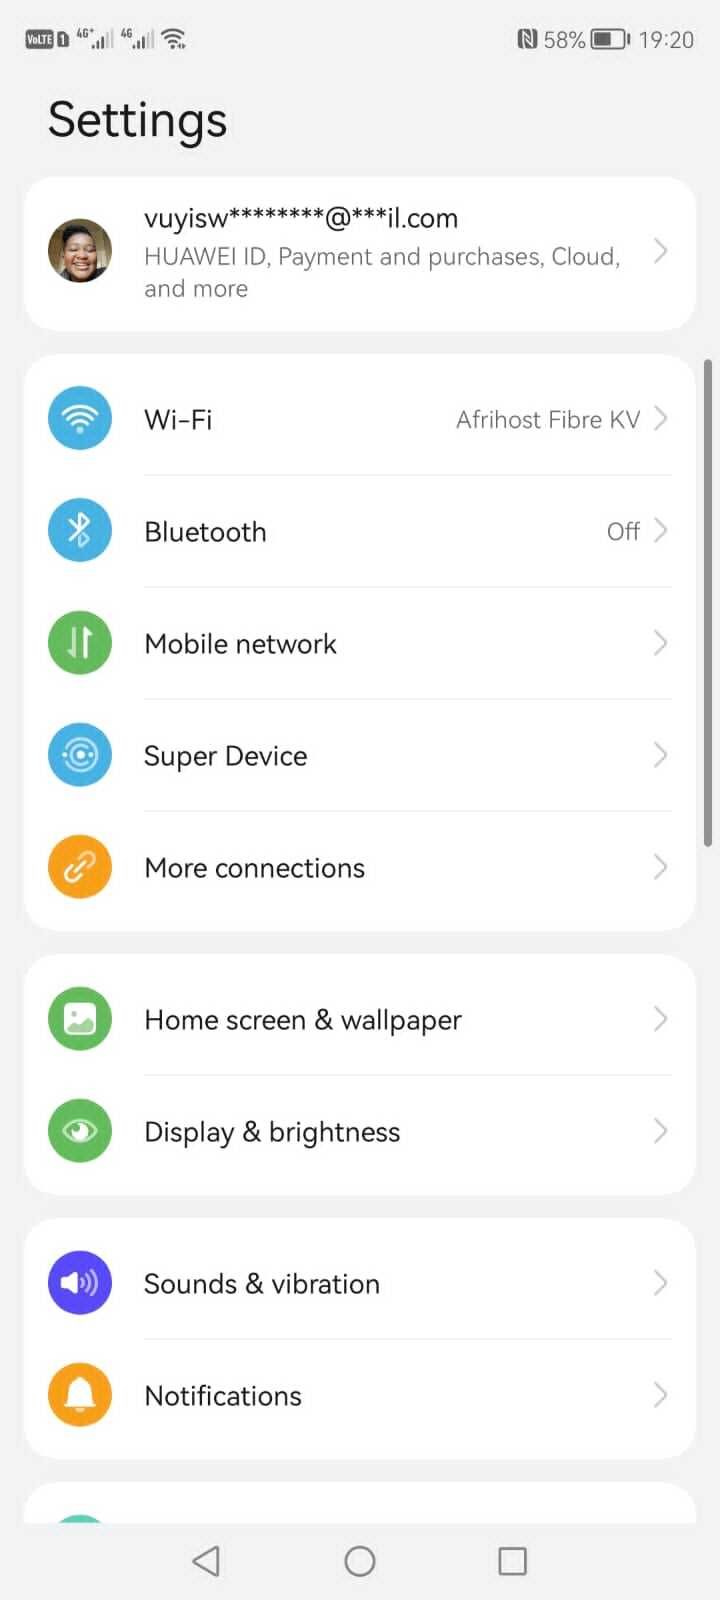 Settings menu on Android phone